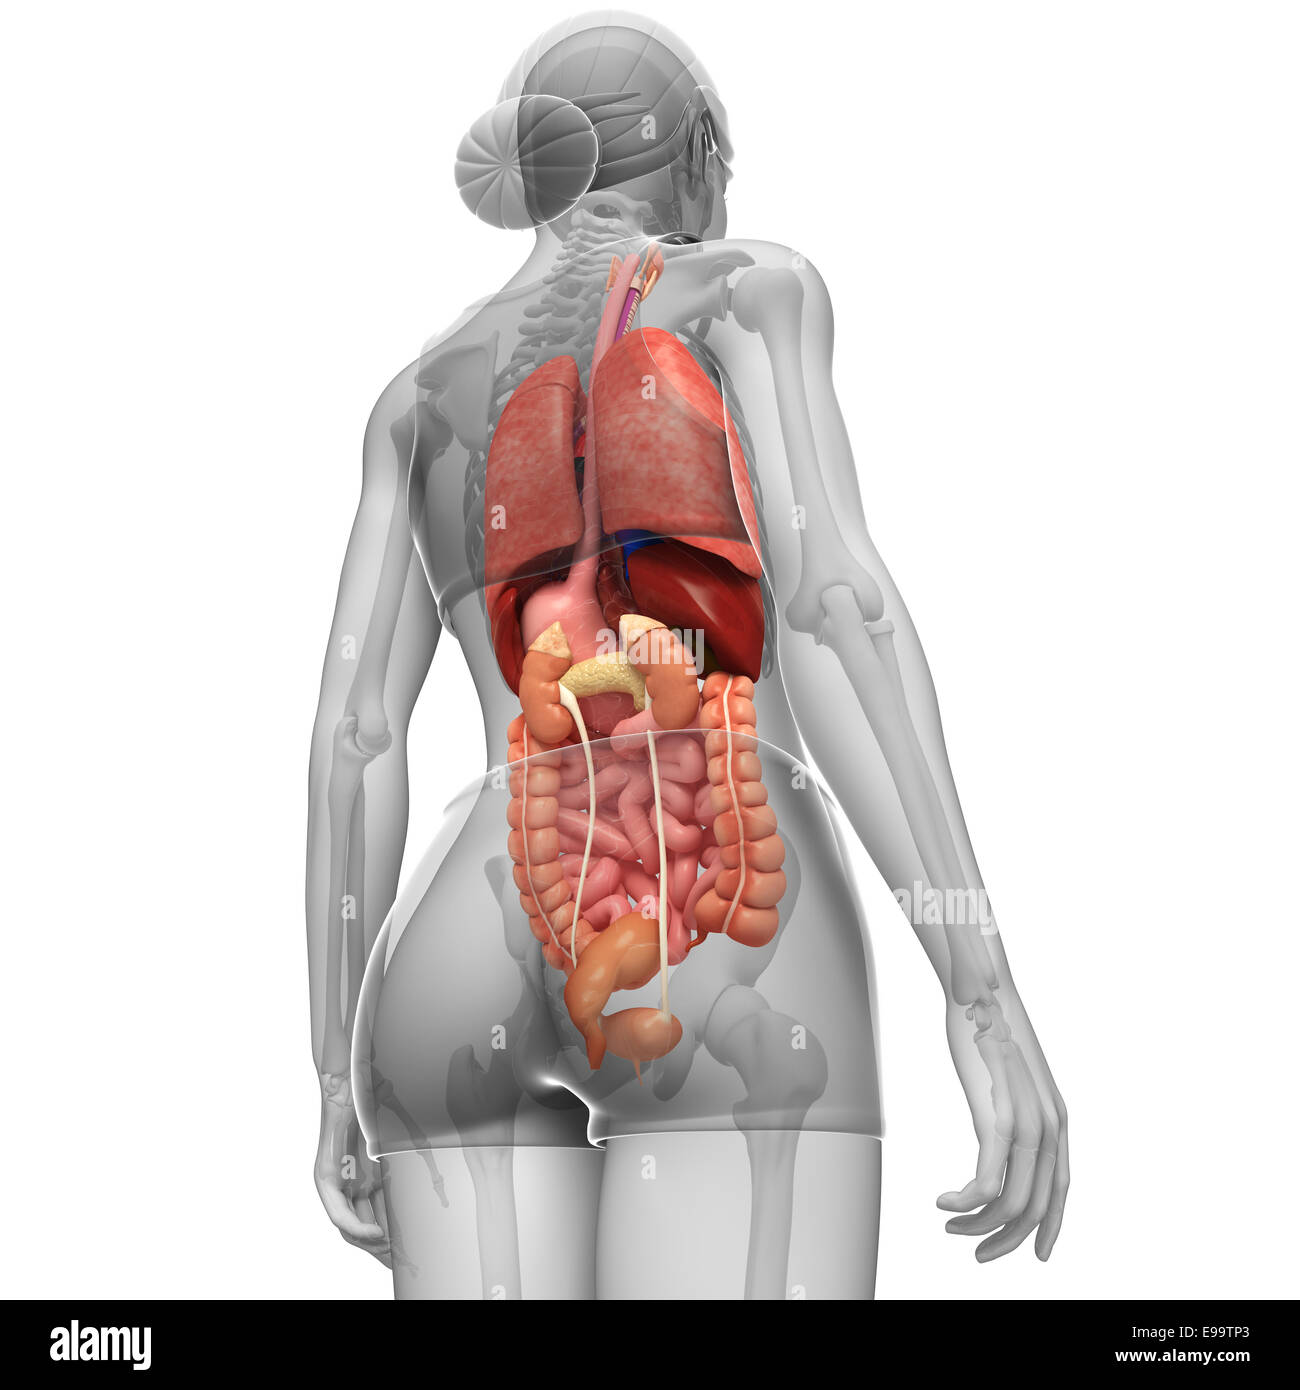 Illustration of female digestive system back view Stock Photo - Alamy